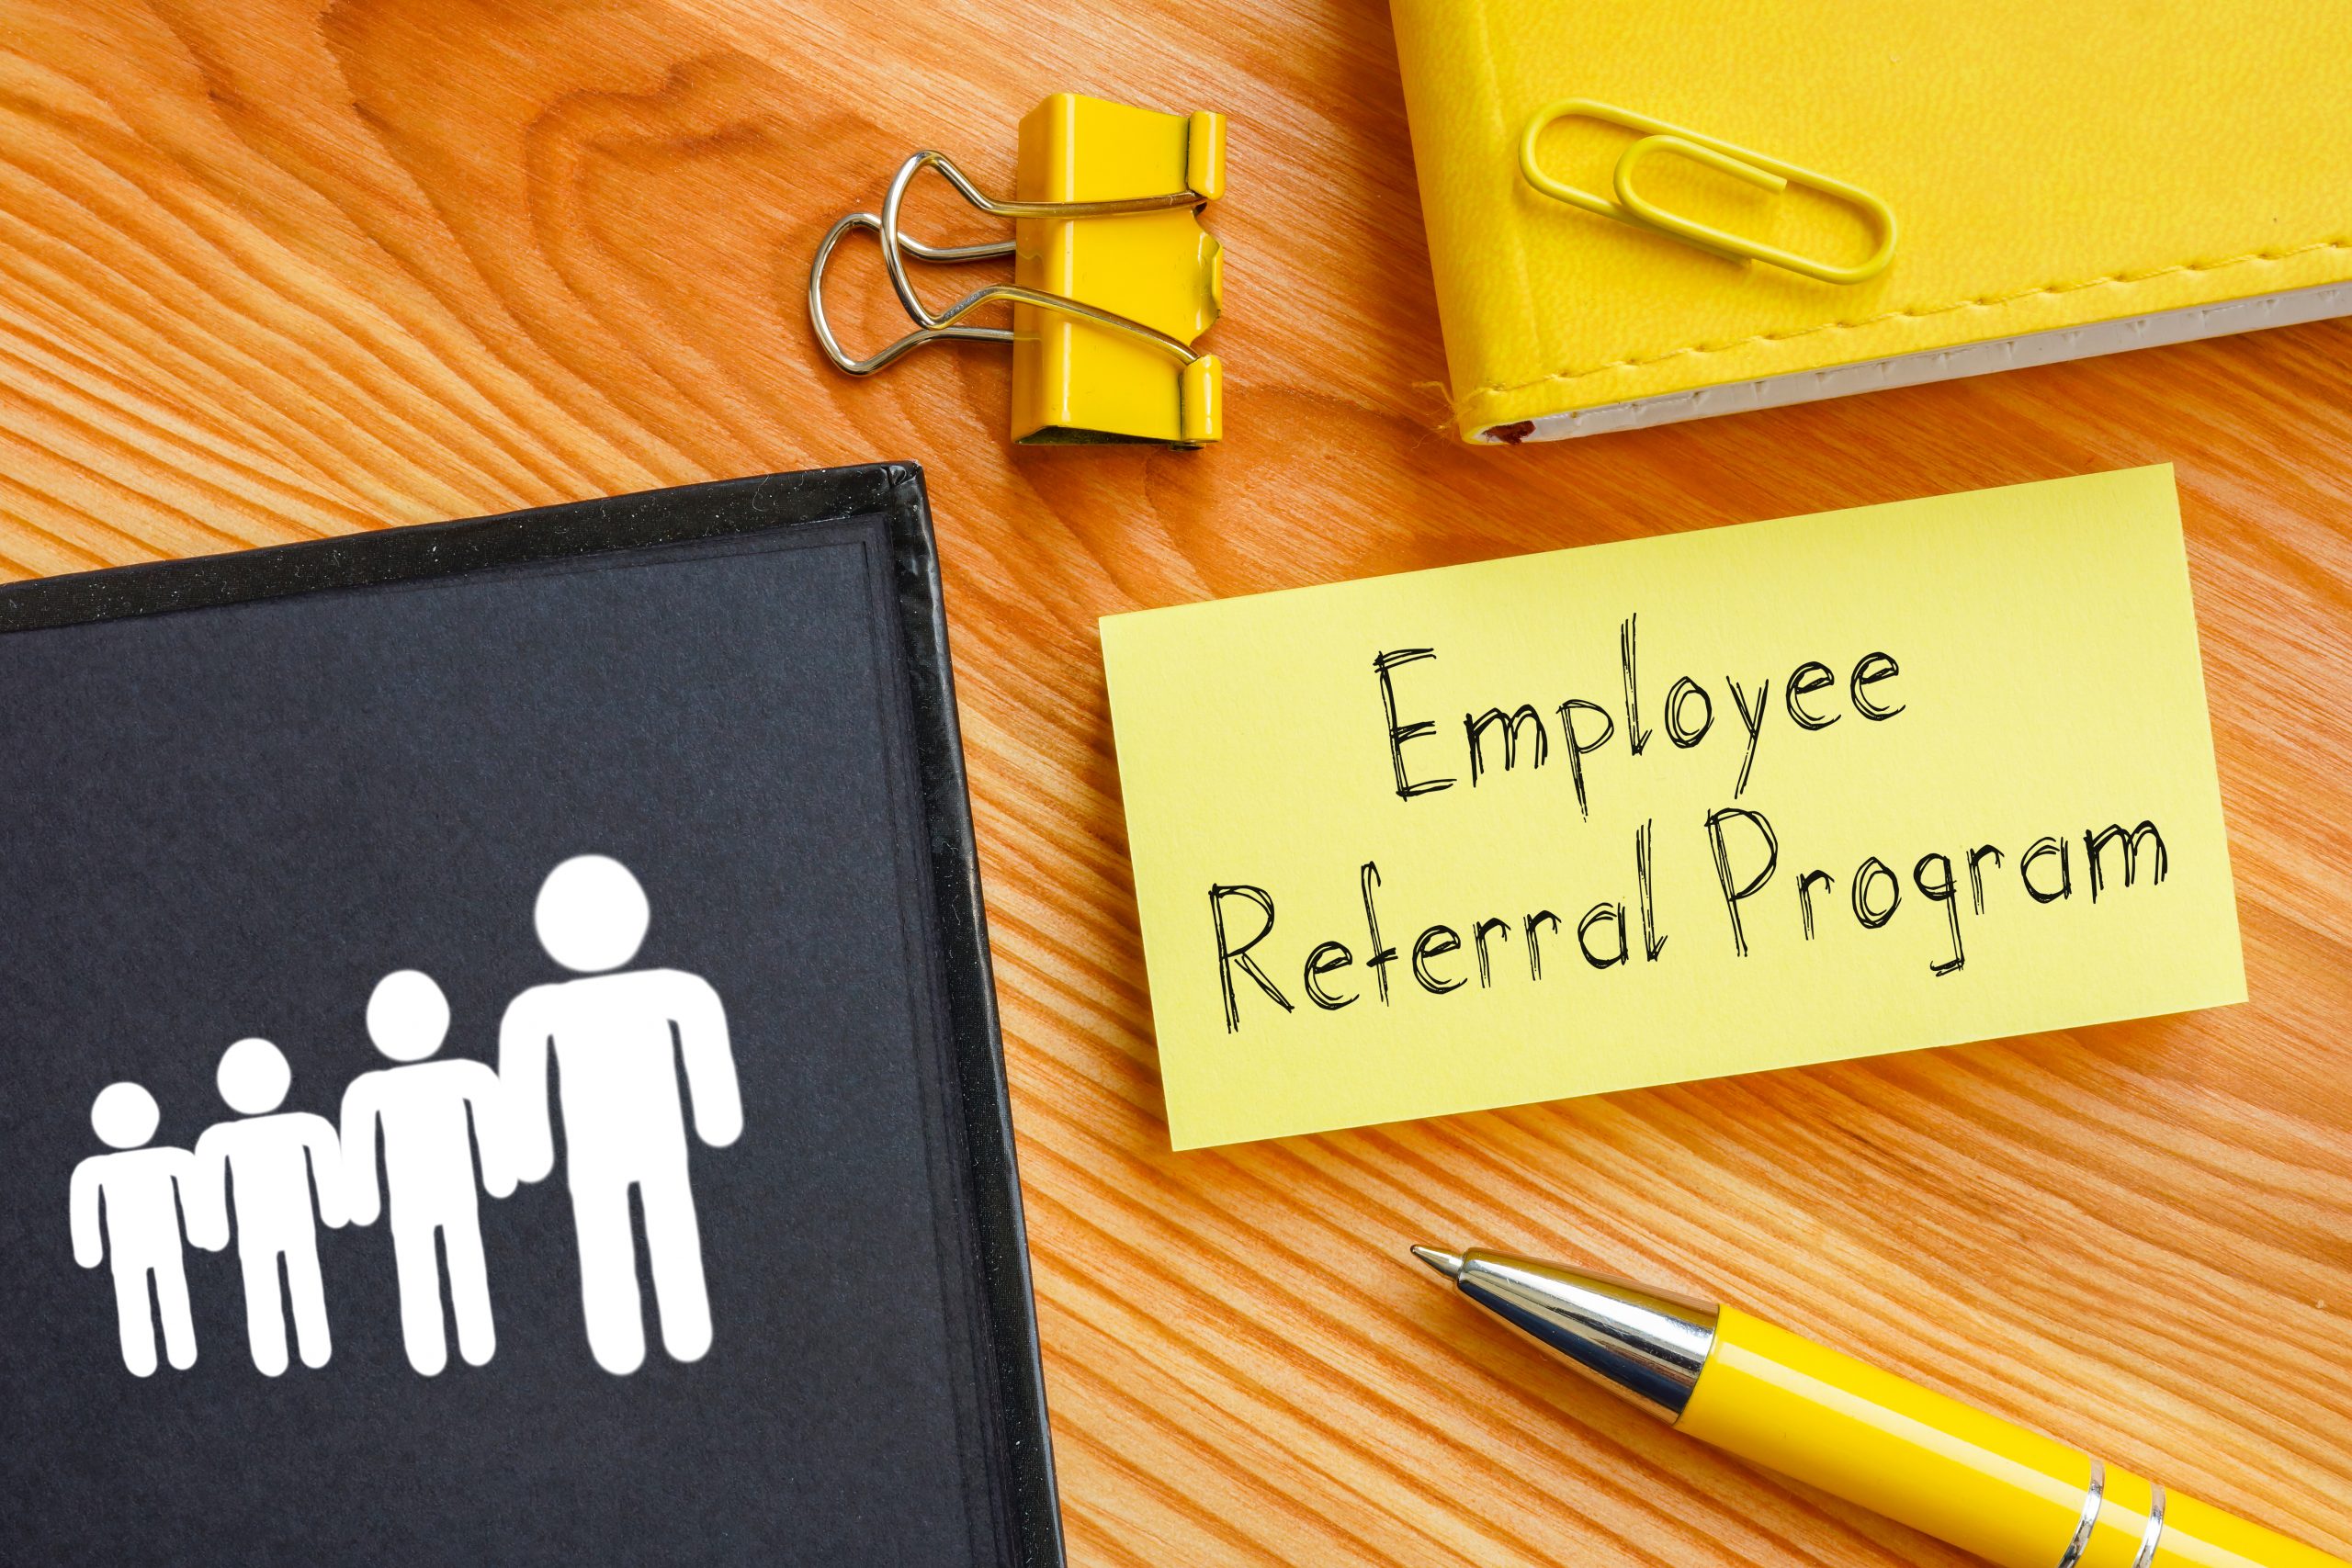 ASW Global Employee Referral Program